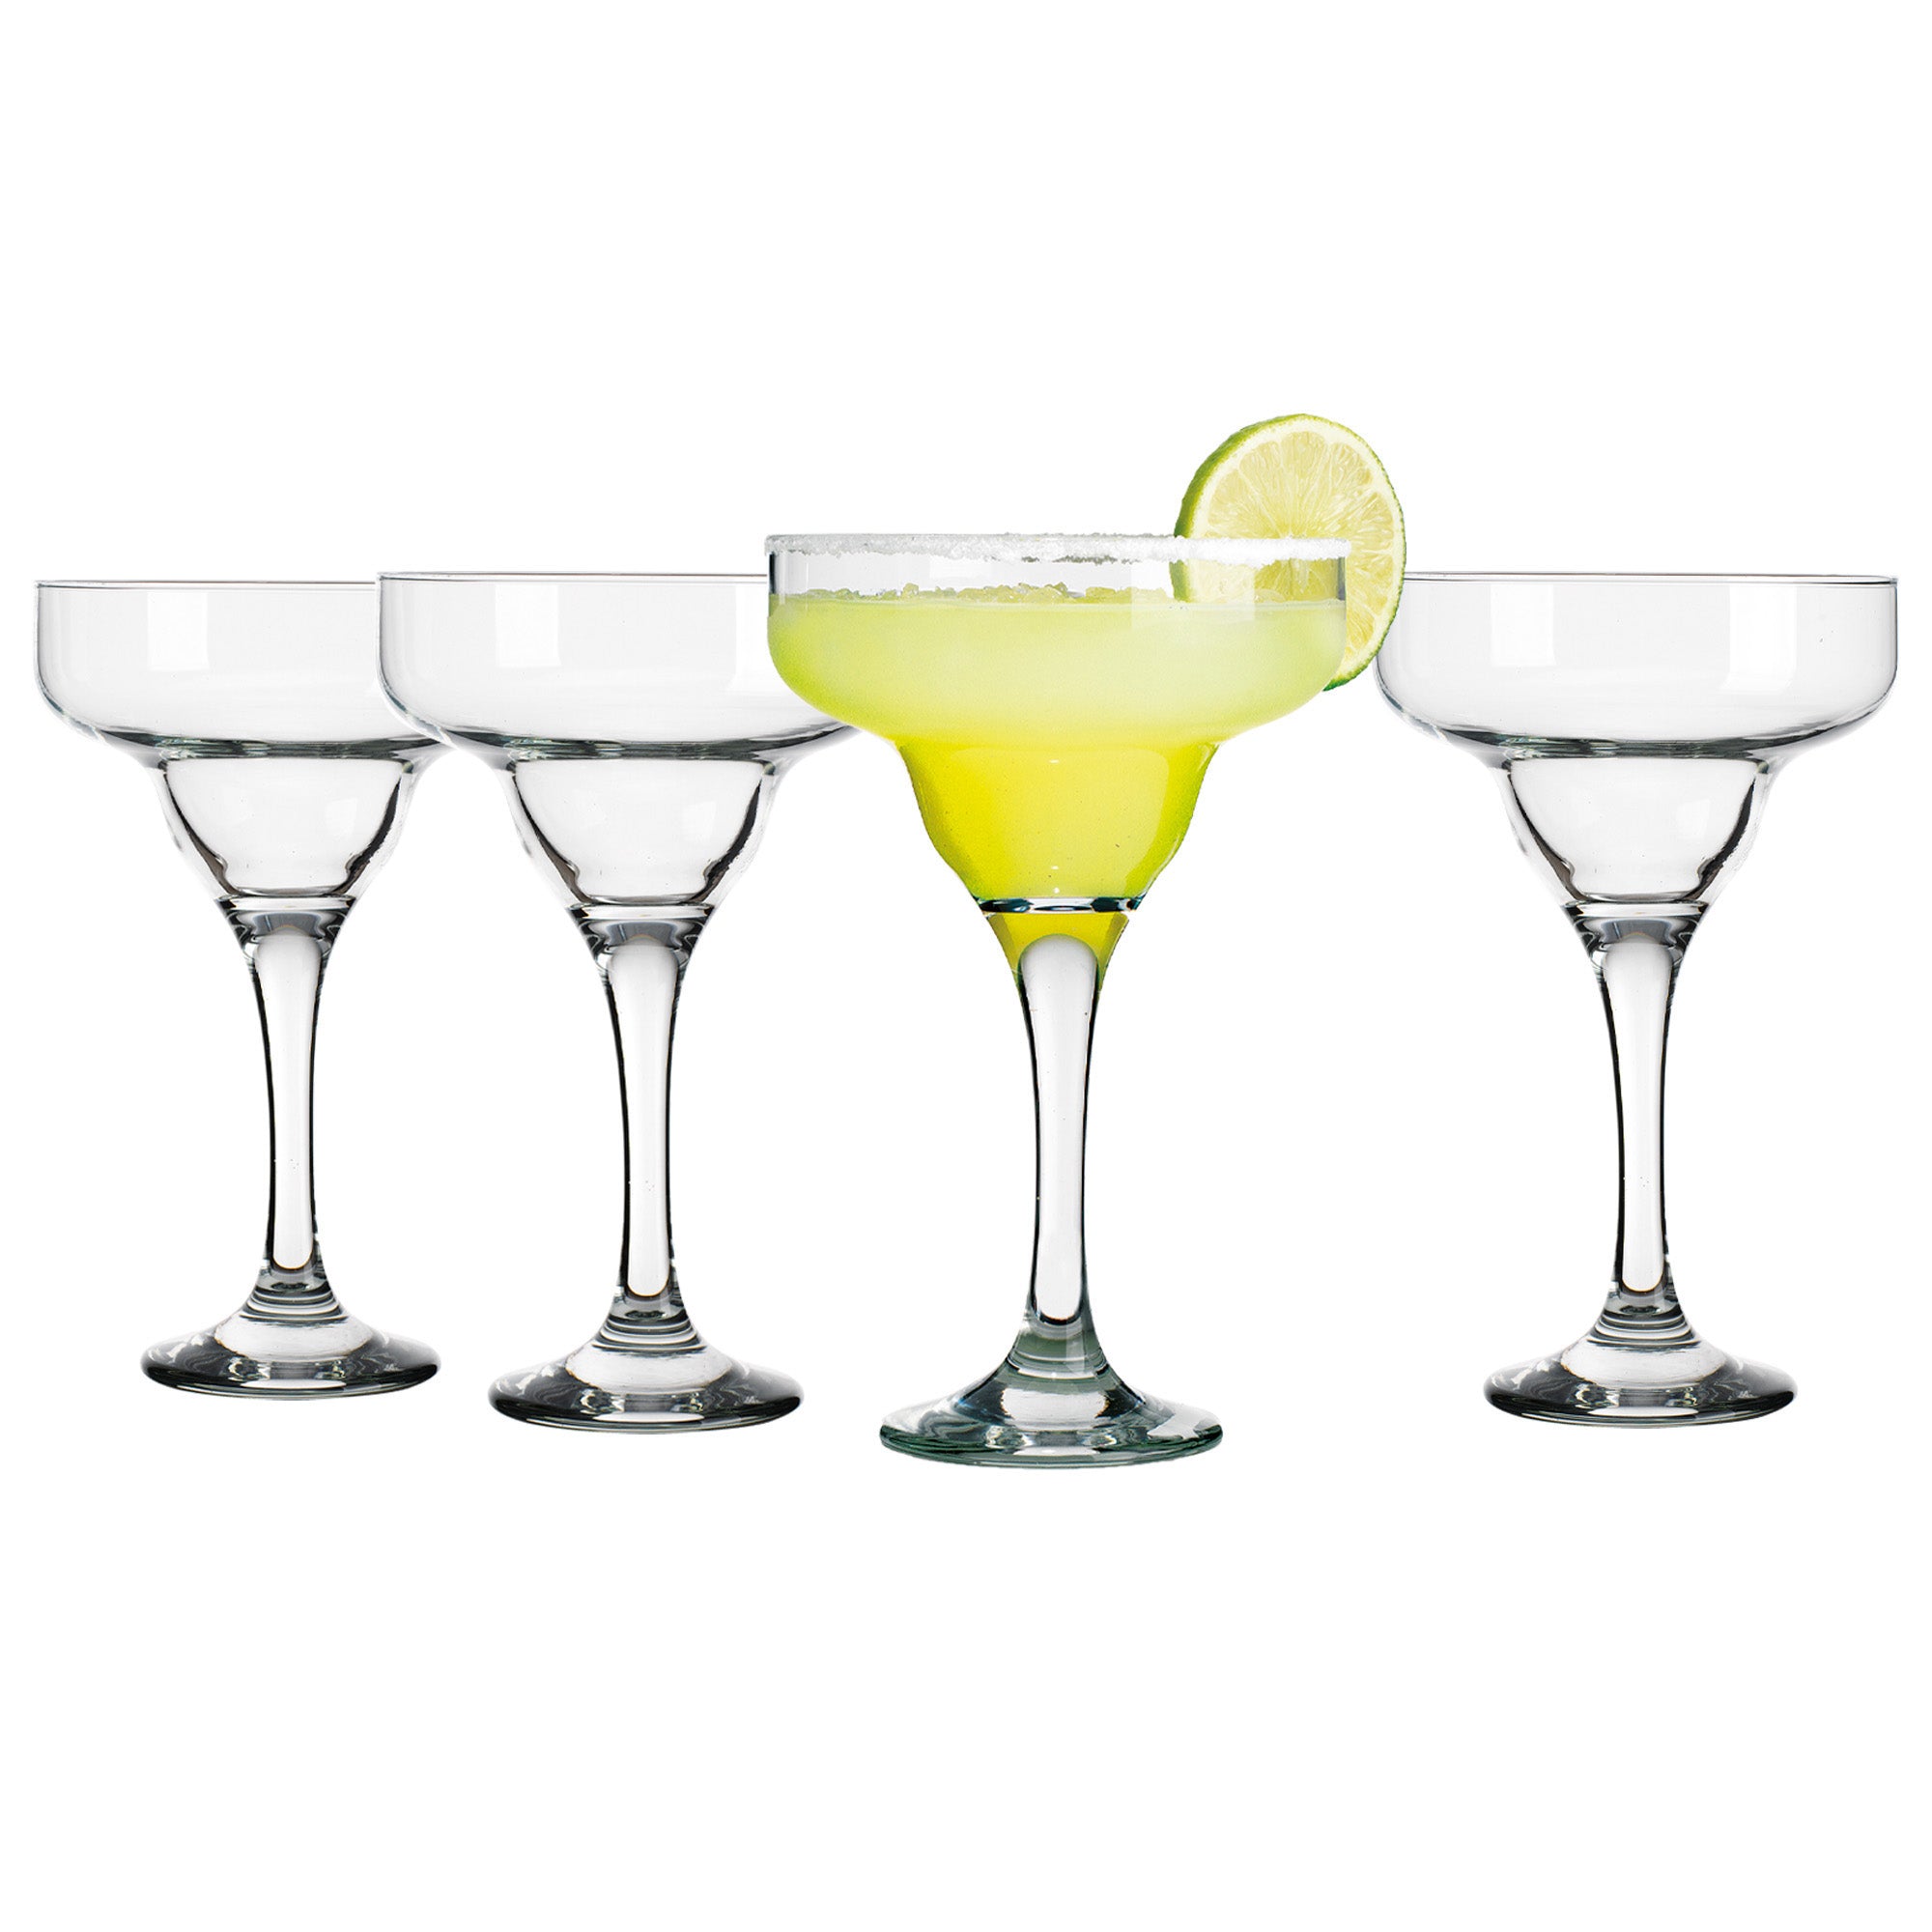 View Home Essentials - Margarita Glasses